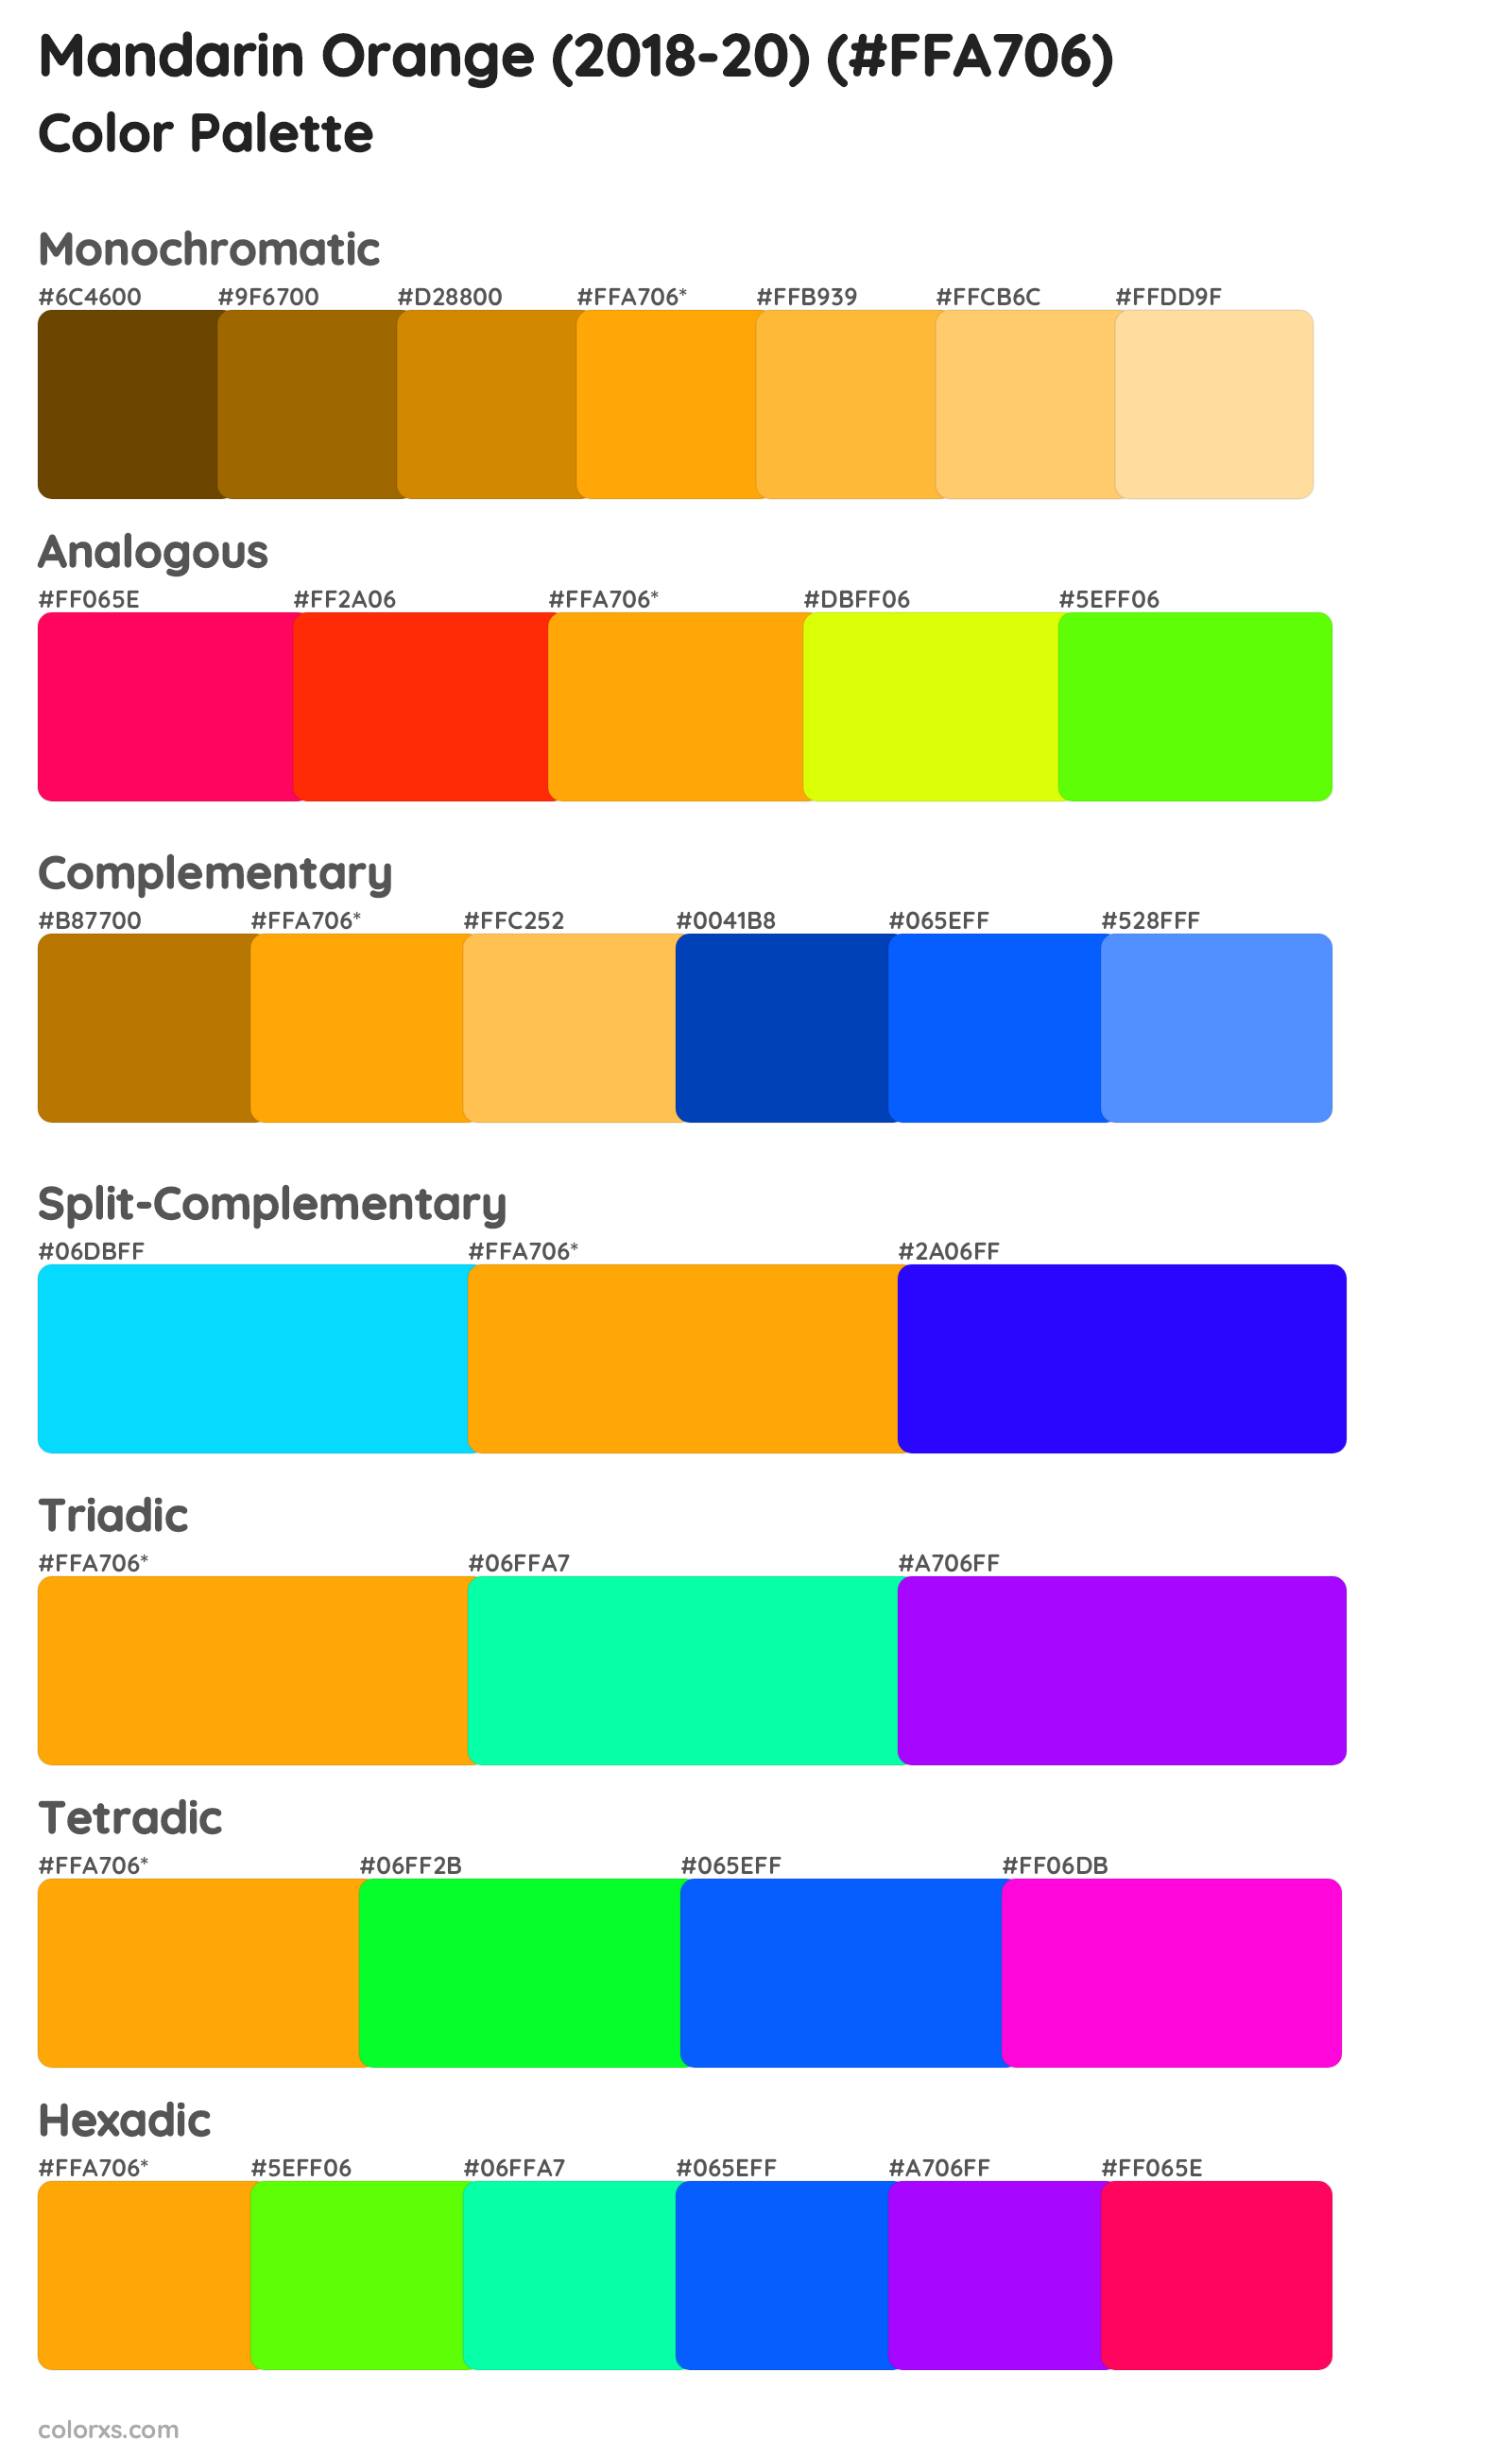 Mandarin Orange (2018-20) Color Scheme Palettes